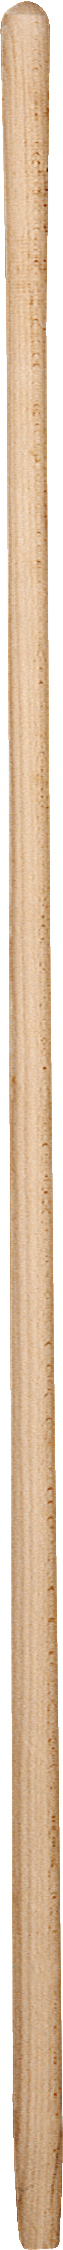 TRIUSO Teerrechenstiel Buche 165 cm Sperrgut